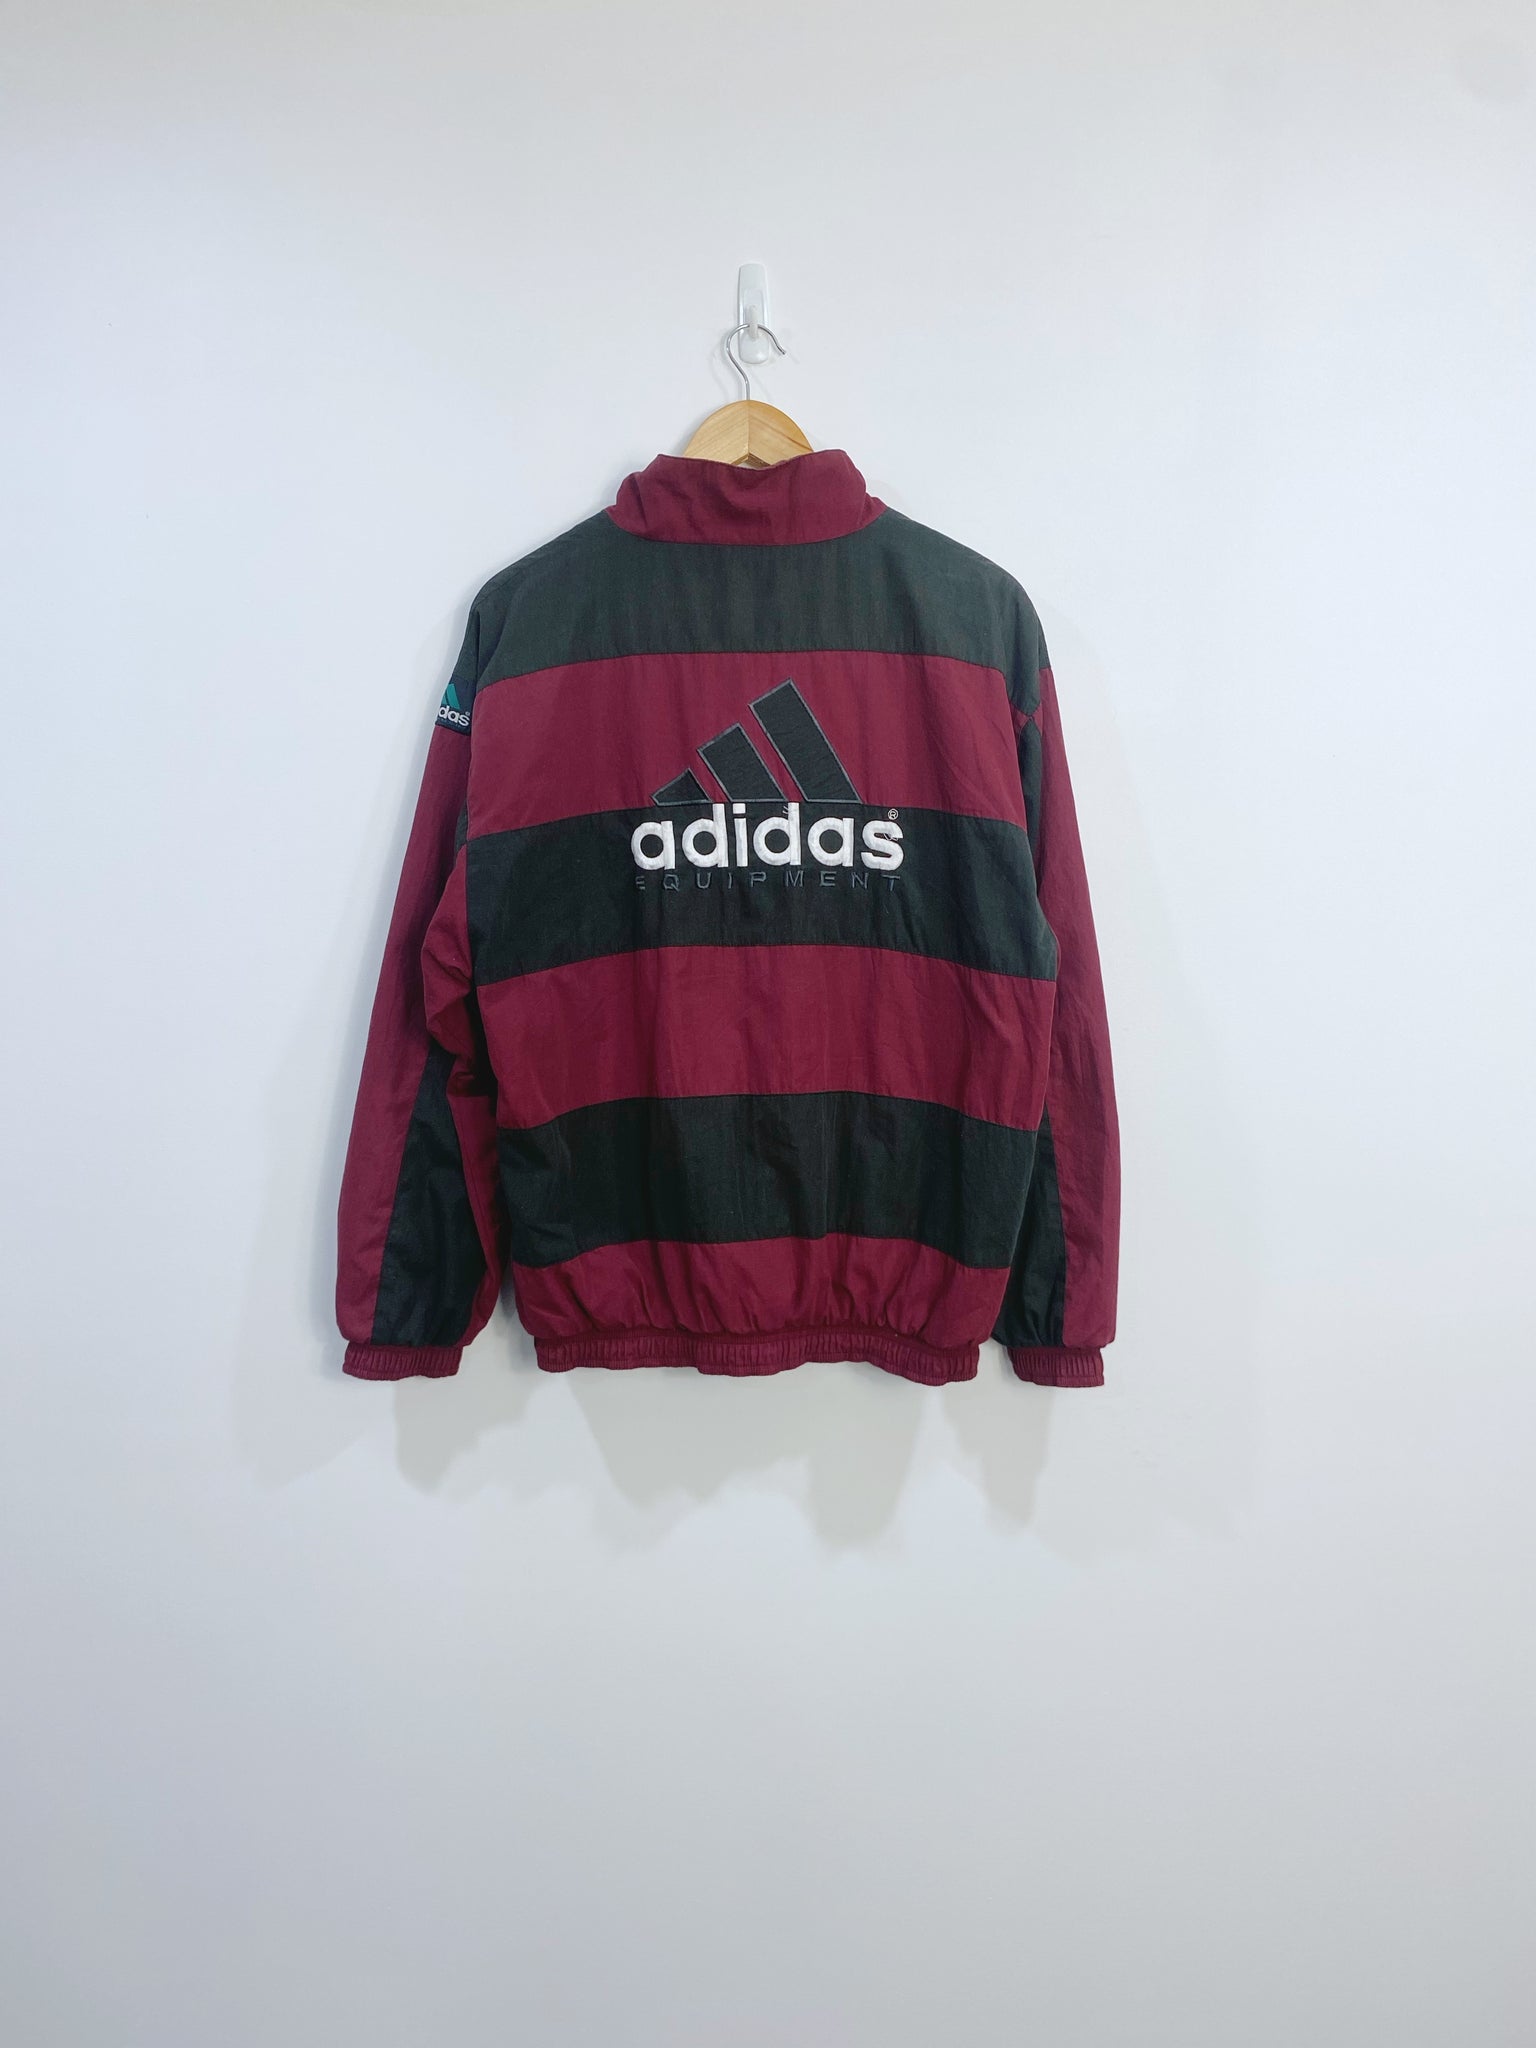 Vintage 90s Adidas Equipment Embroidered Jacket M